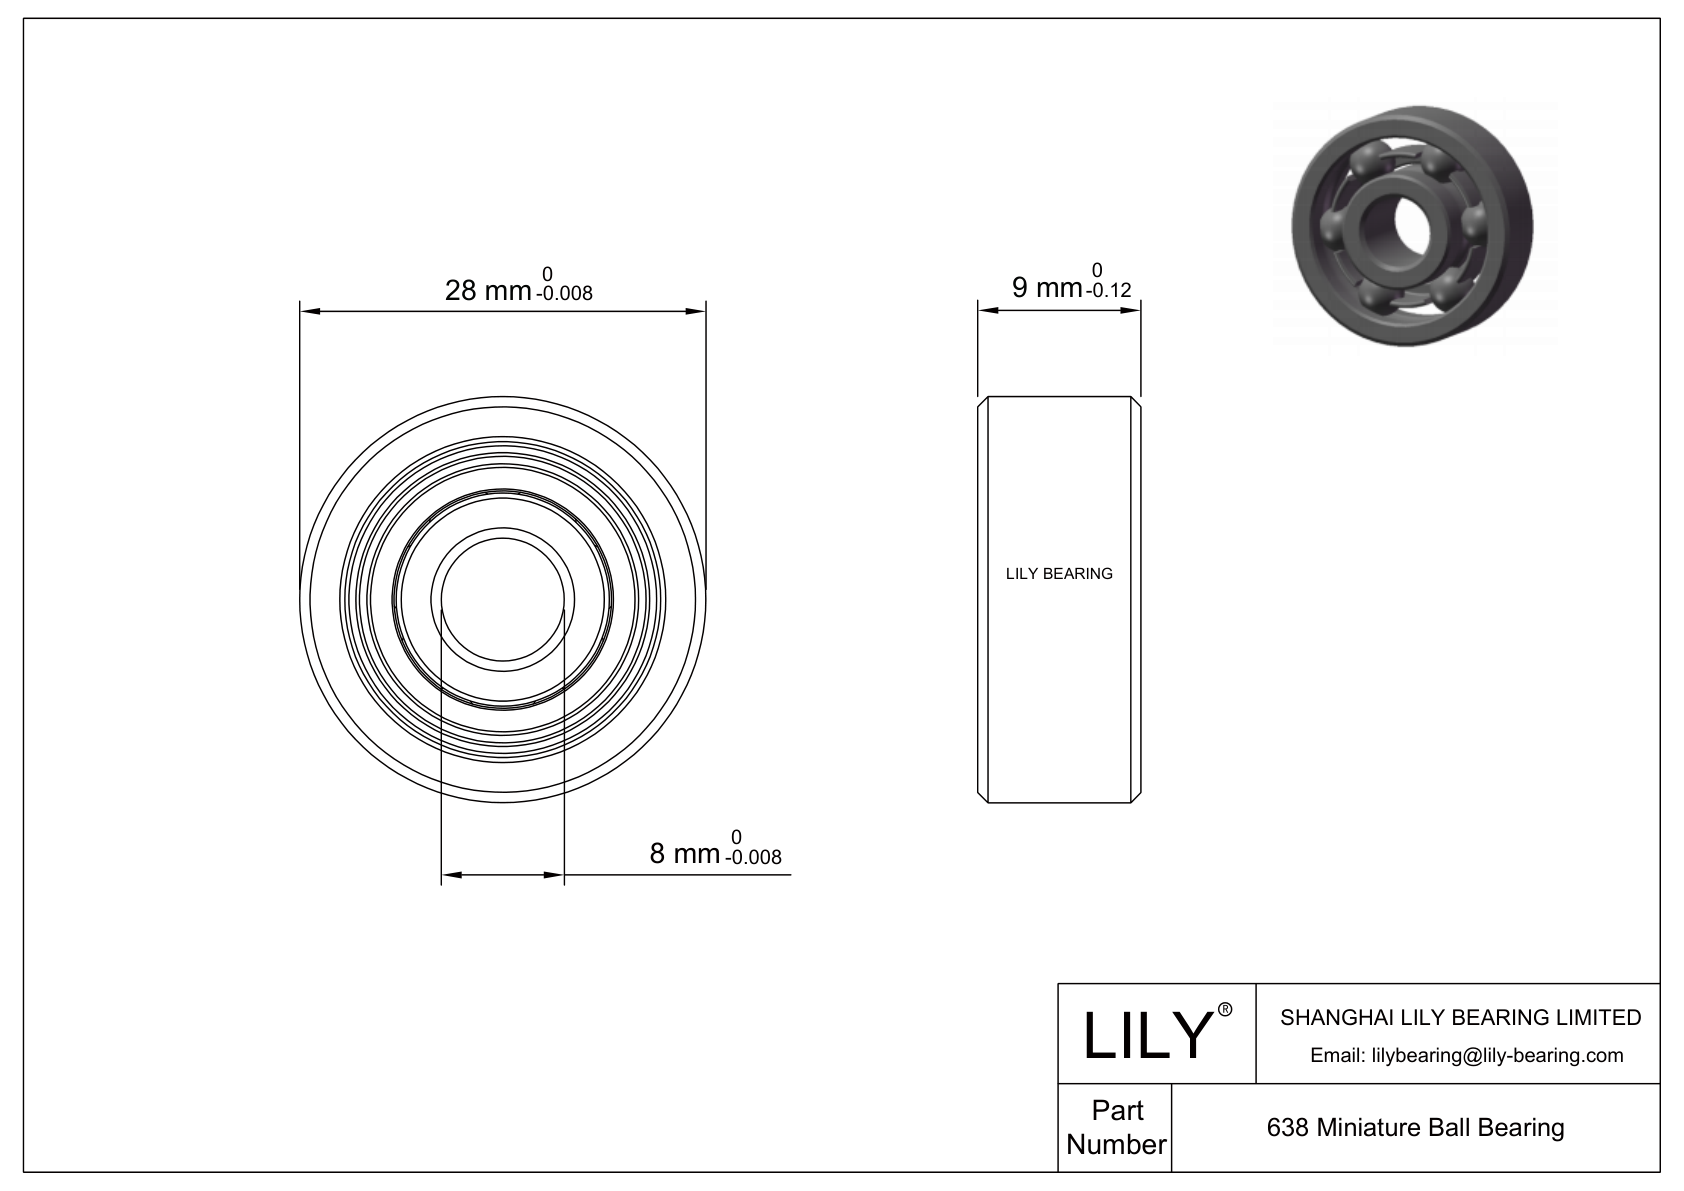 LILY-PU63840-20 Polyurethane Coated Bearing cad drawing